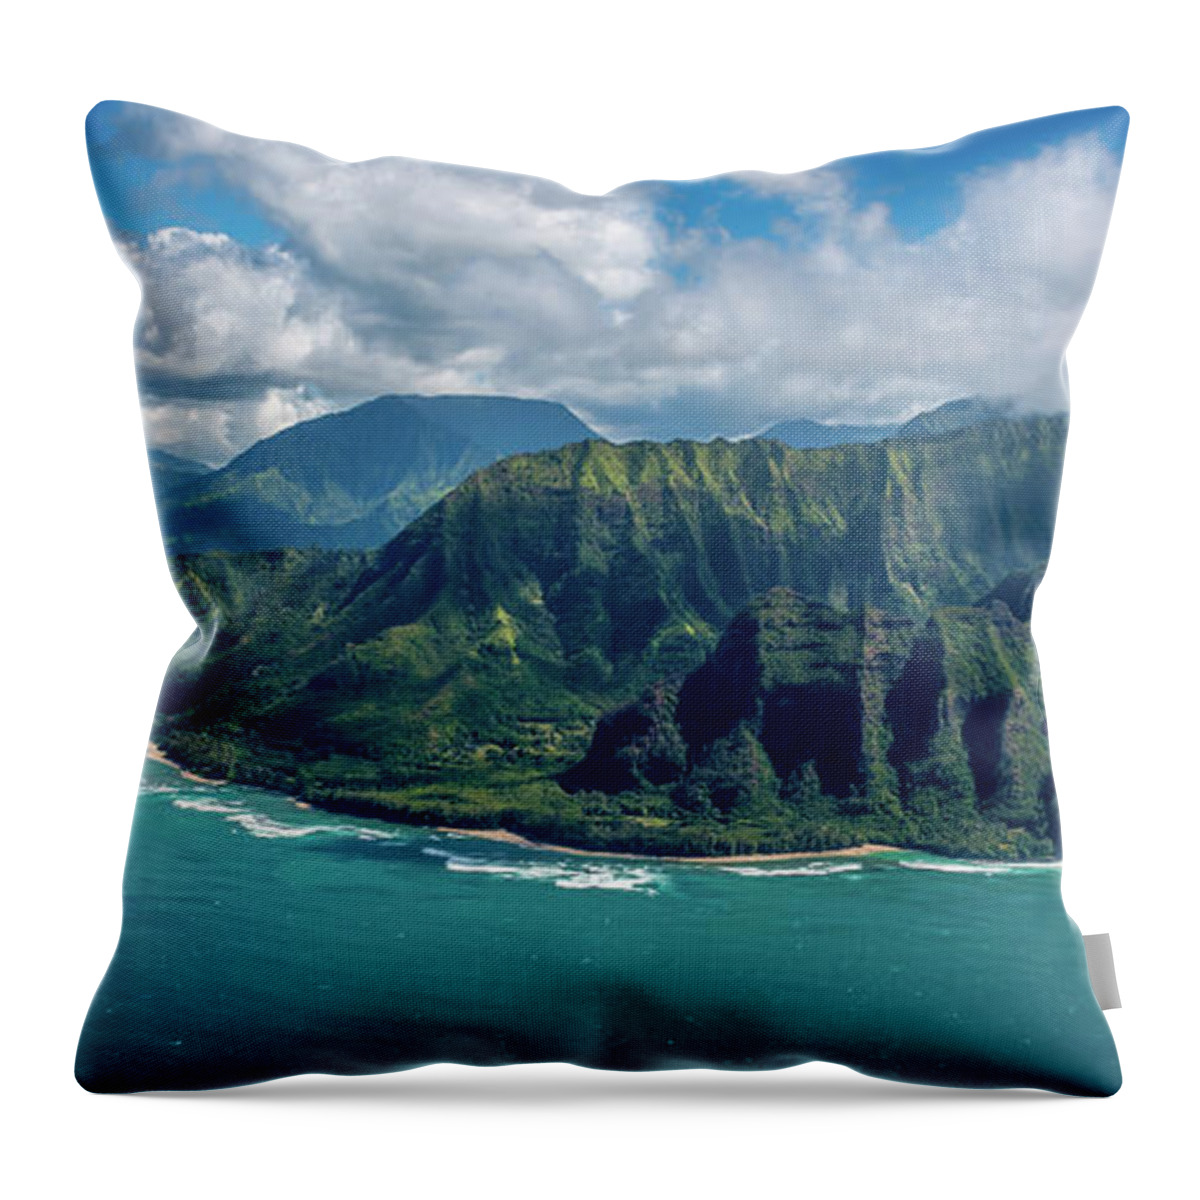 Hawaii Throw Pillow featuring the photograph Kawaii Na Pali Coast by Susie Weaver